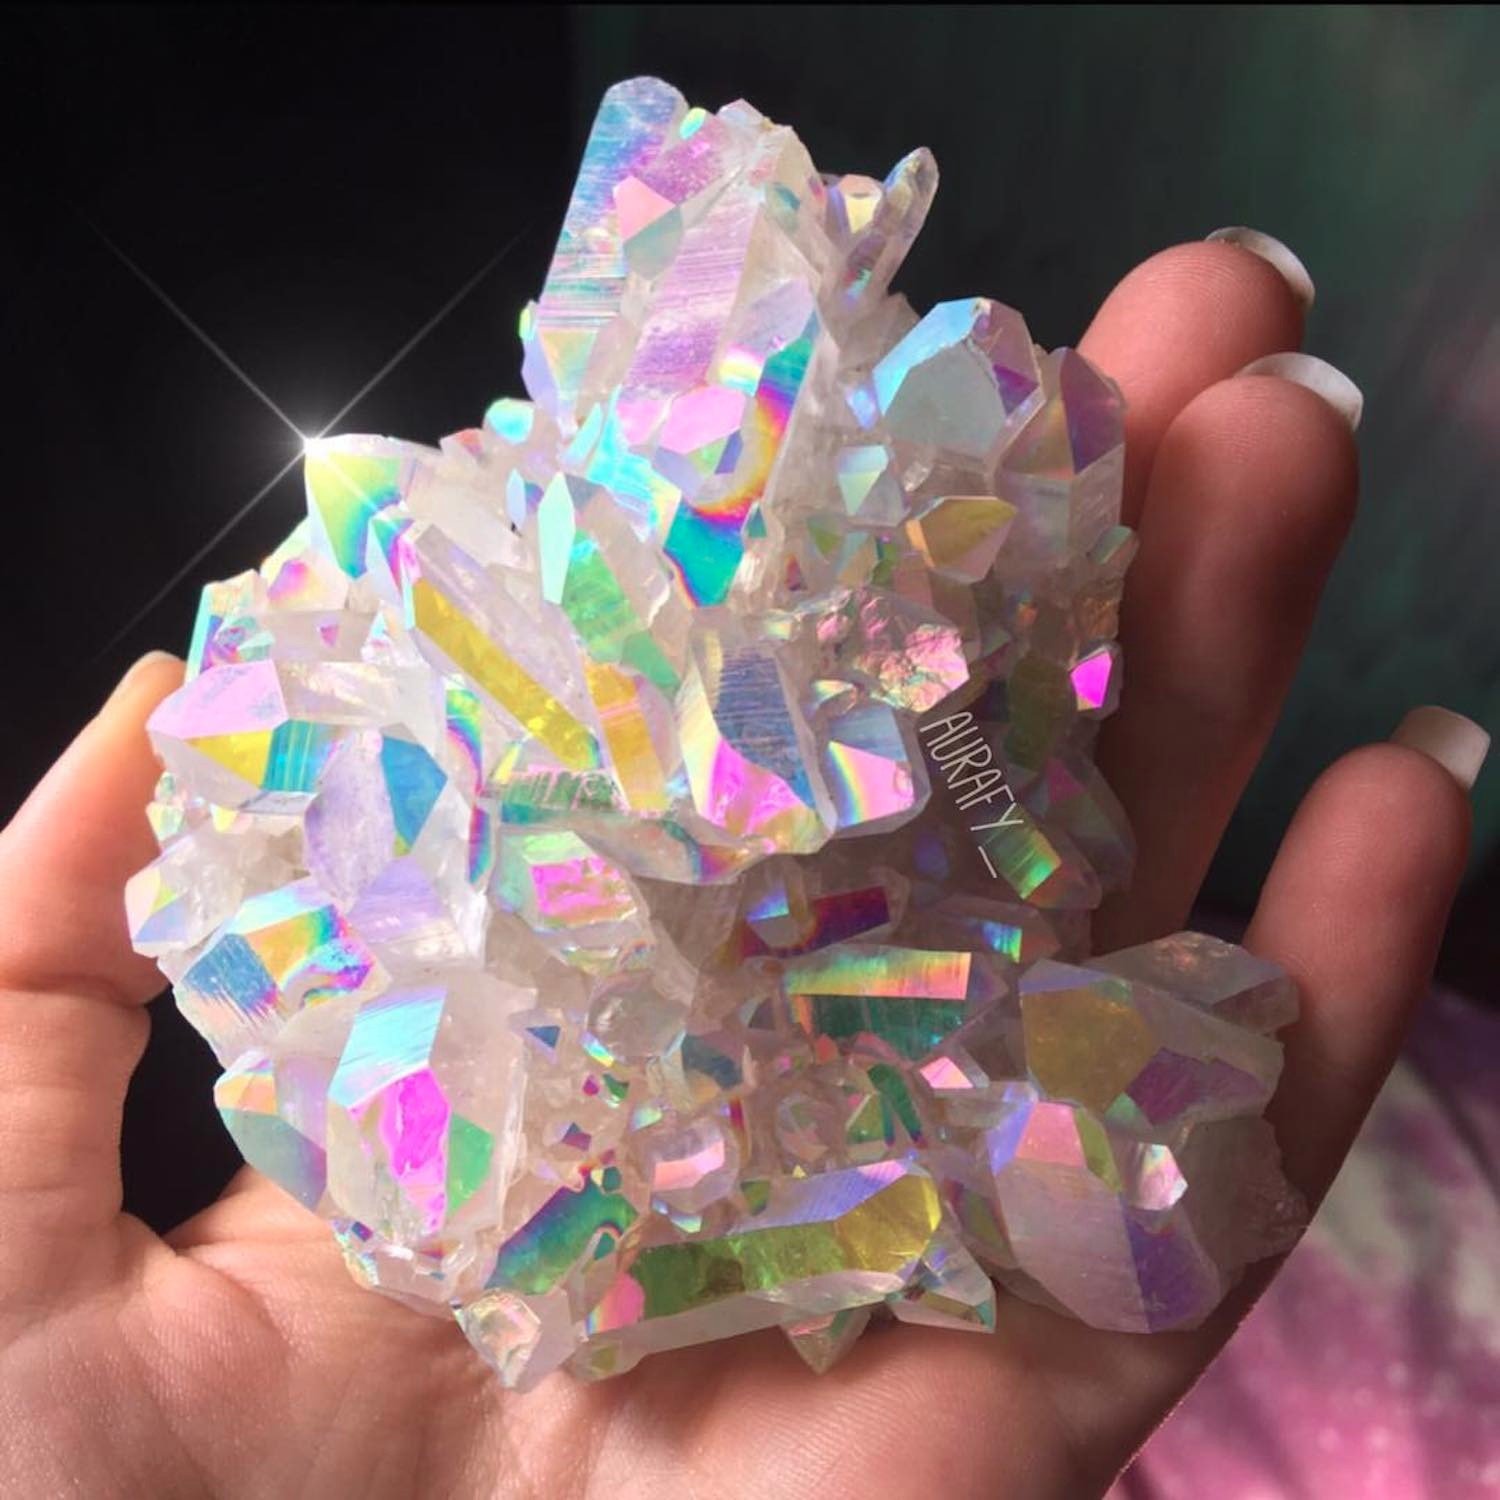 What Are Aura Crystals? | POPSUGAR Smart Living